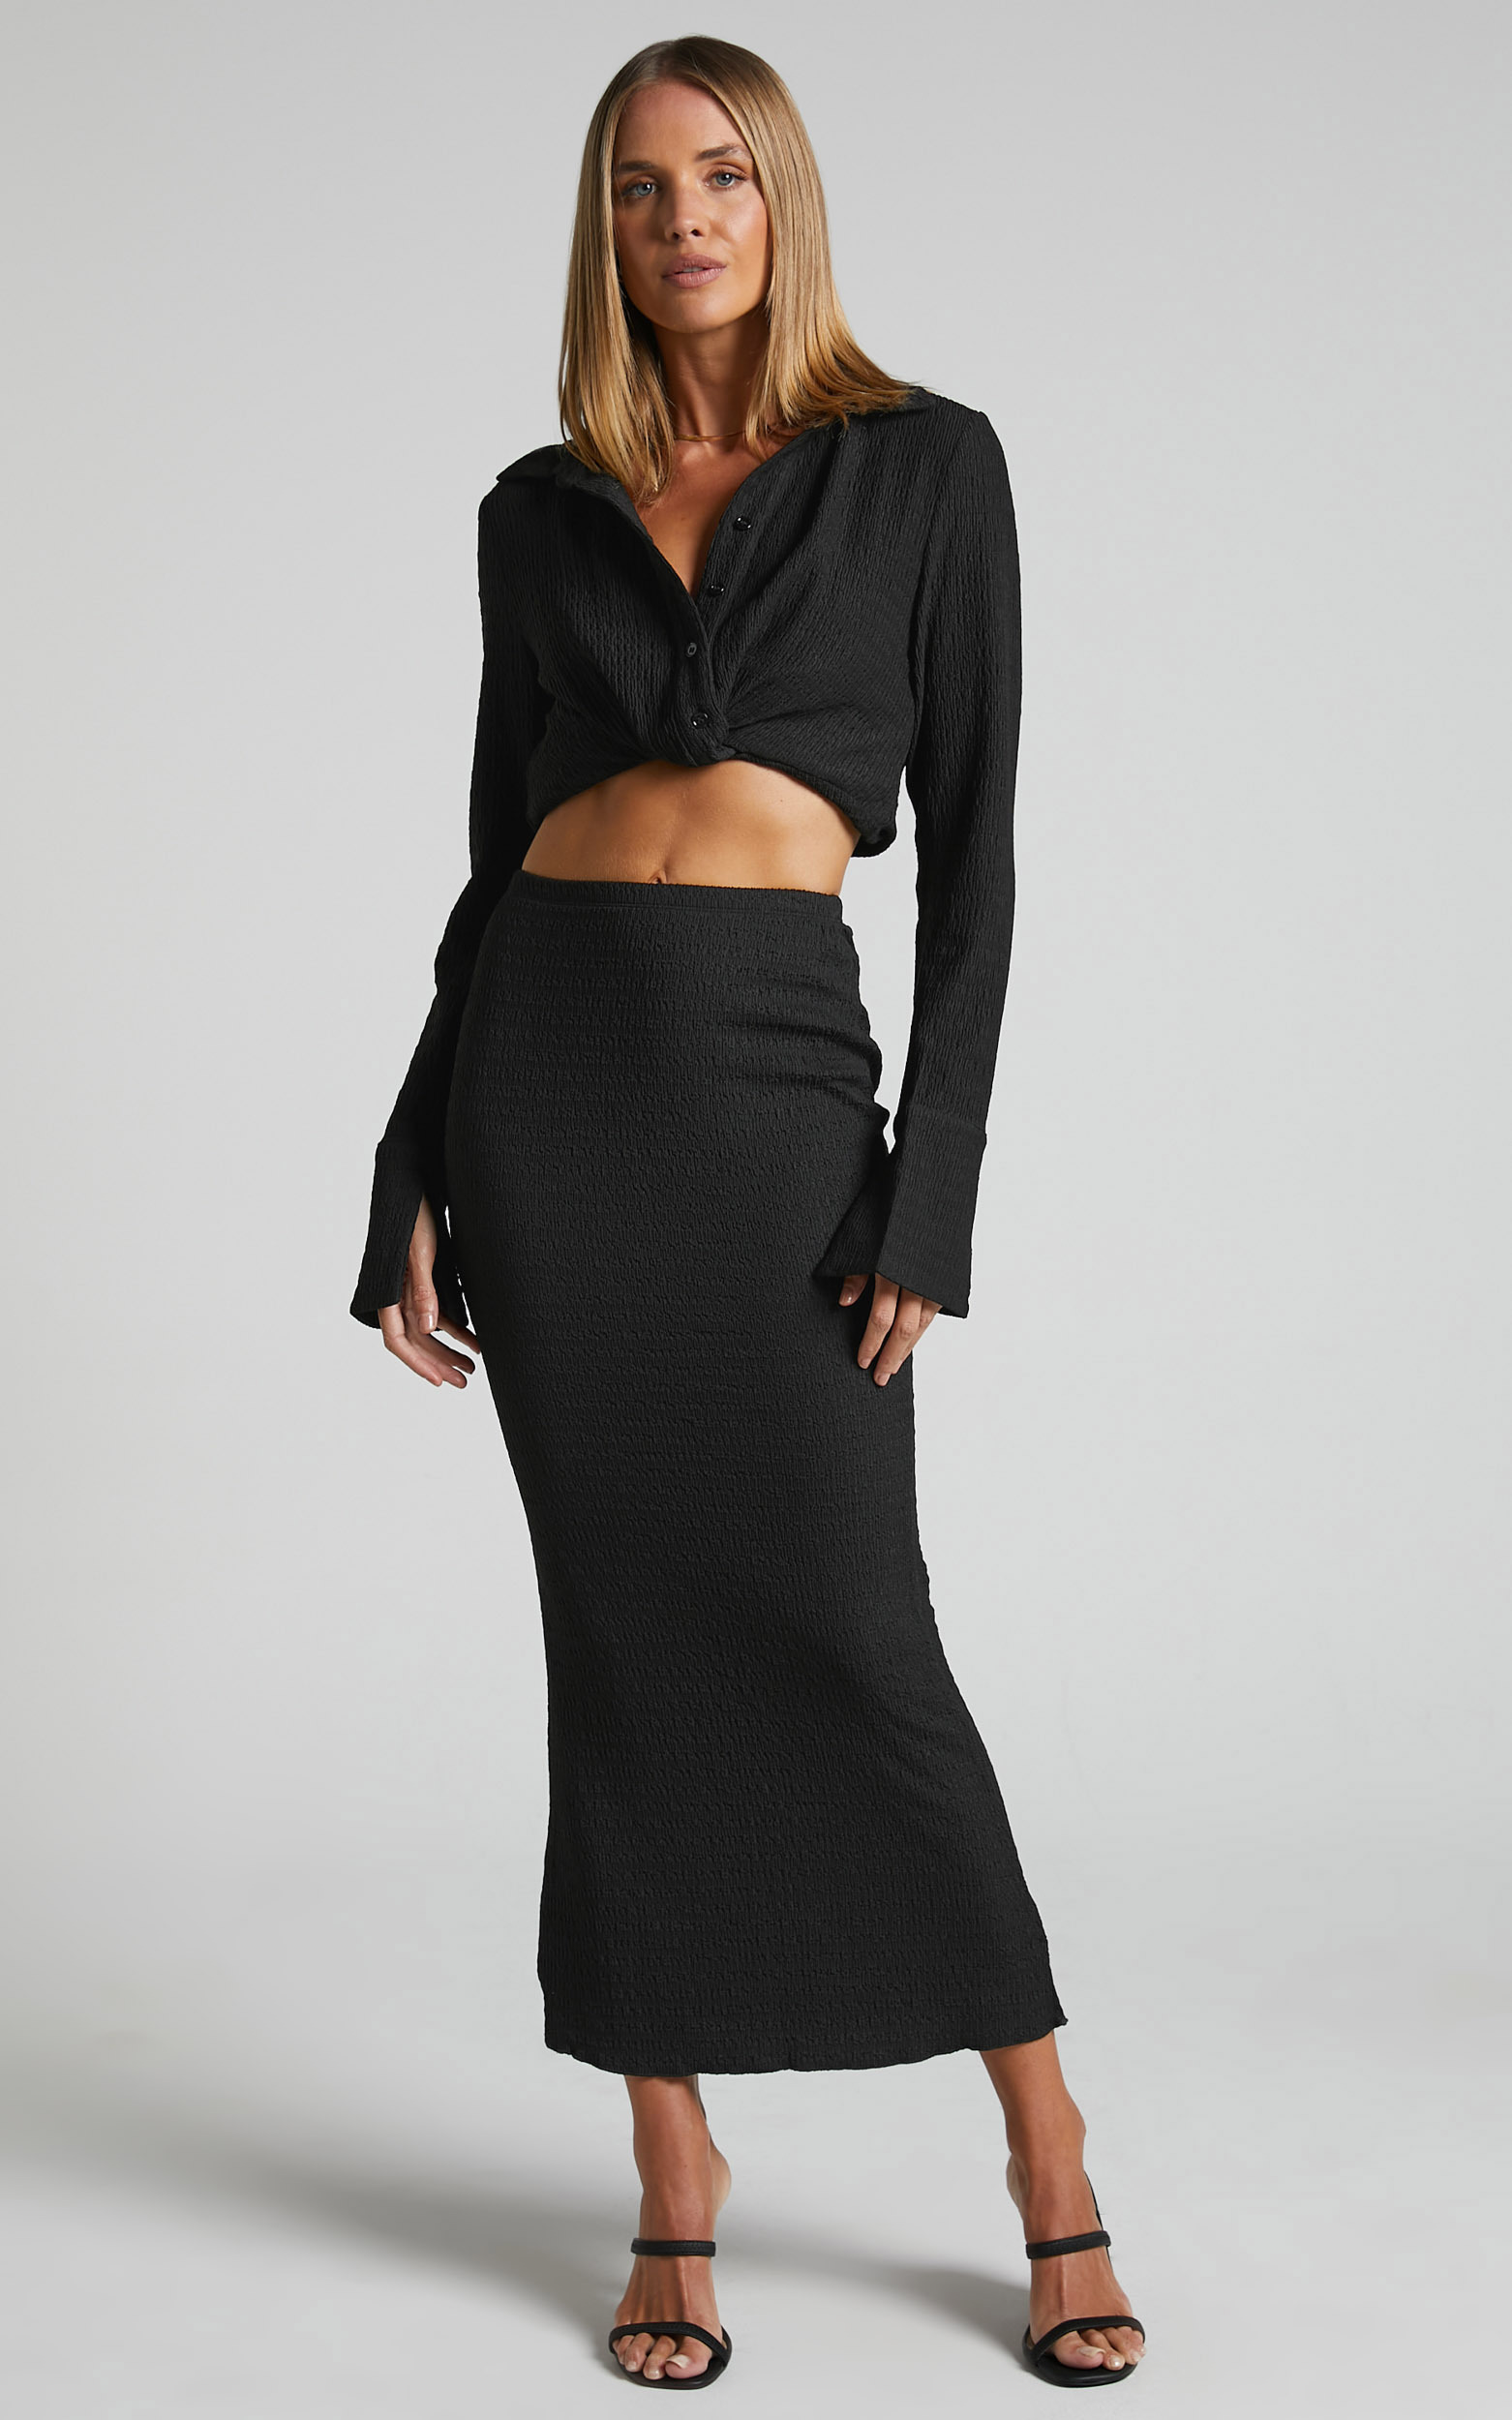 Althea Midi Skirt in Black - 06, BLK1, hi-res image number null